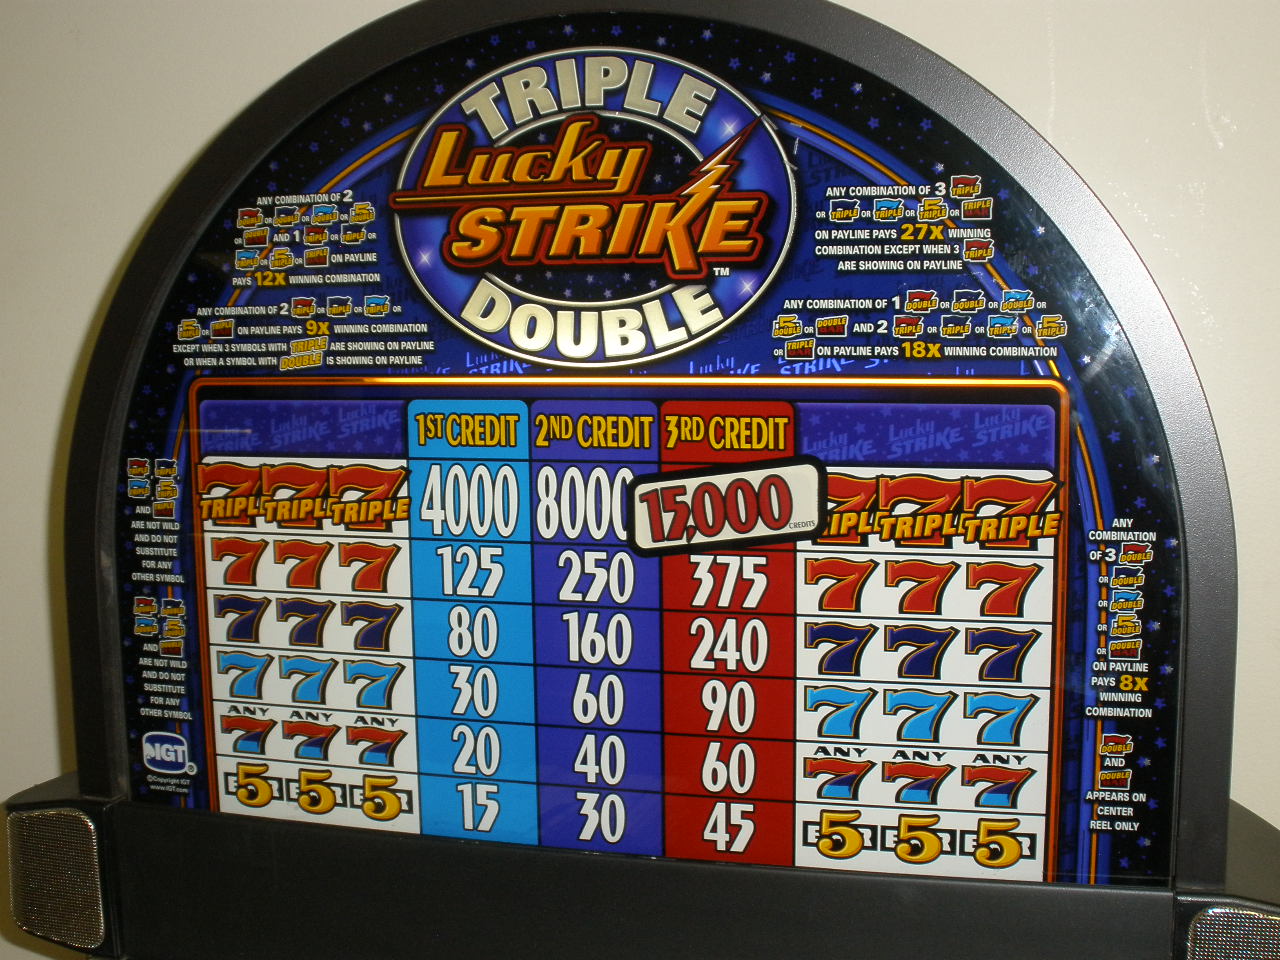 free triple double slots